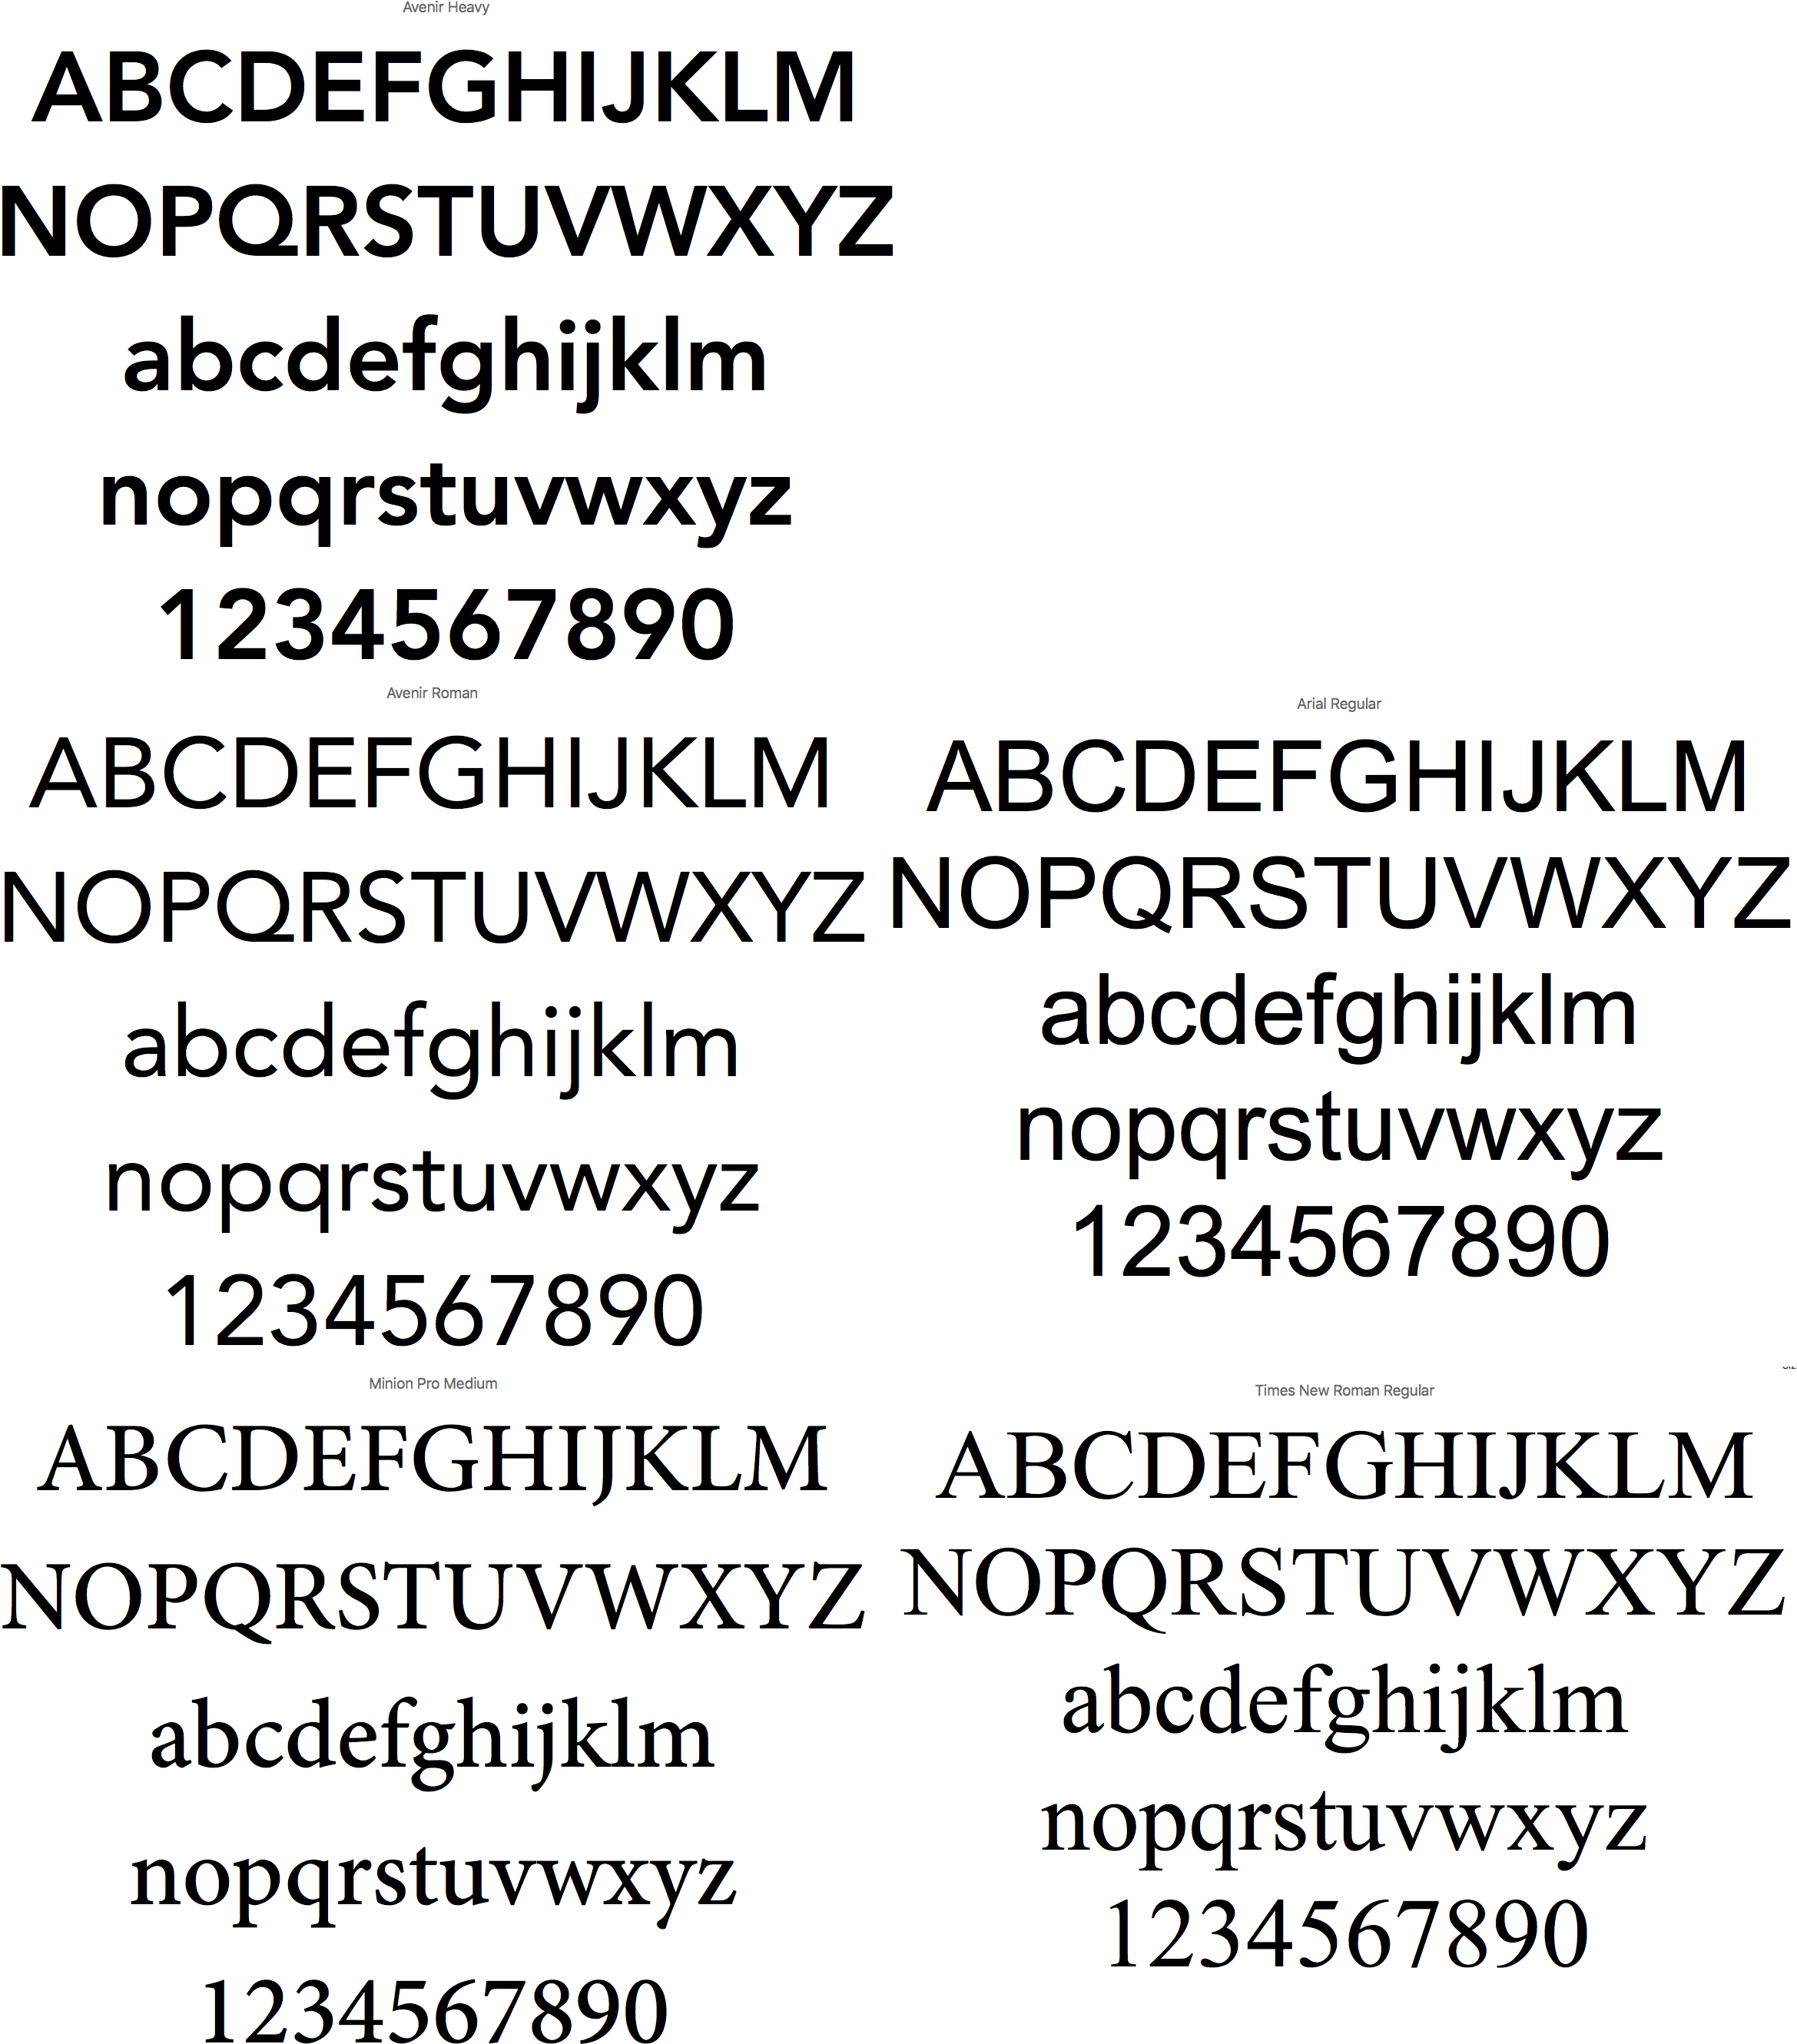 mac version of fonts